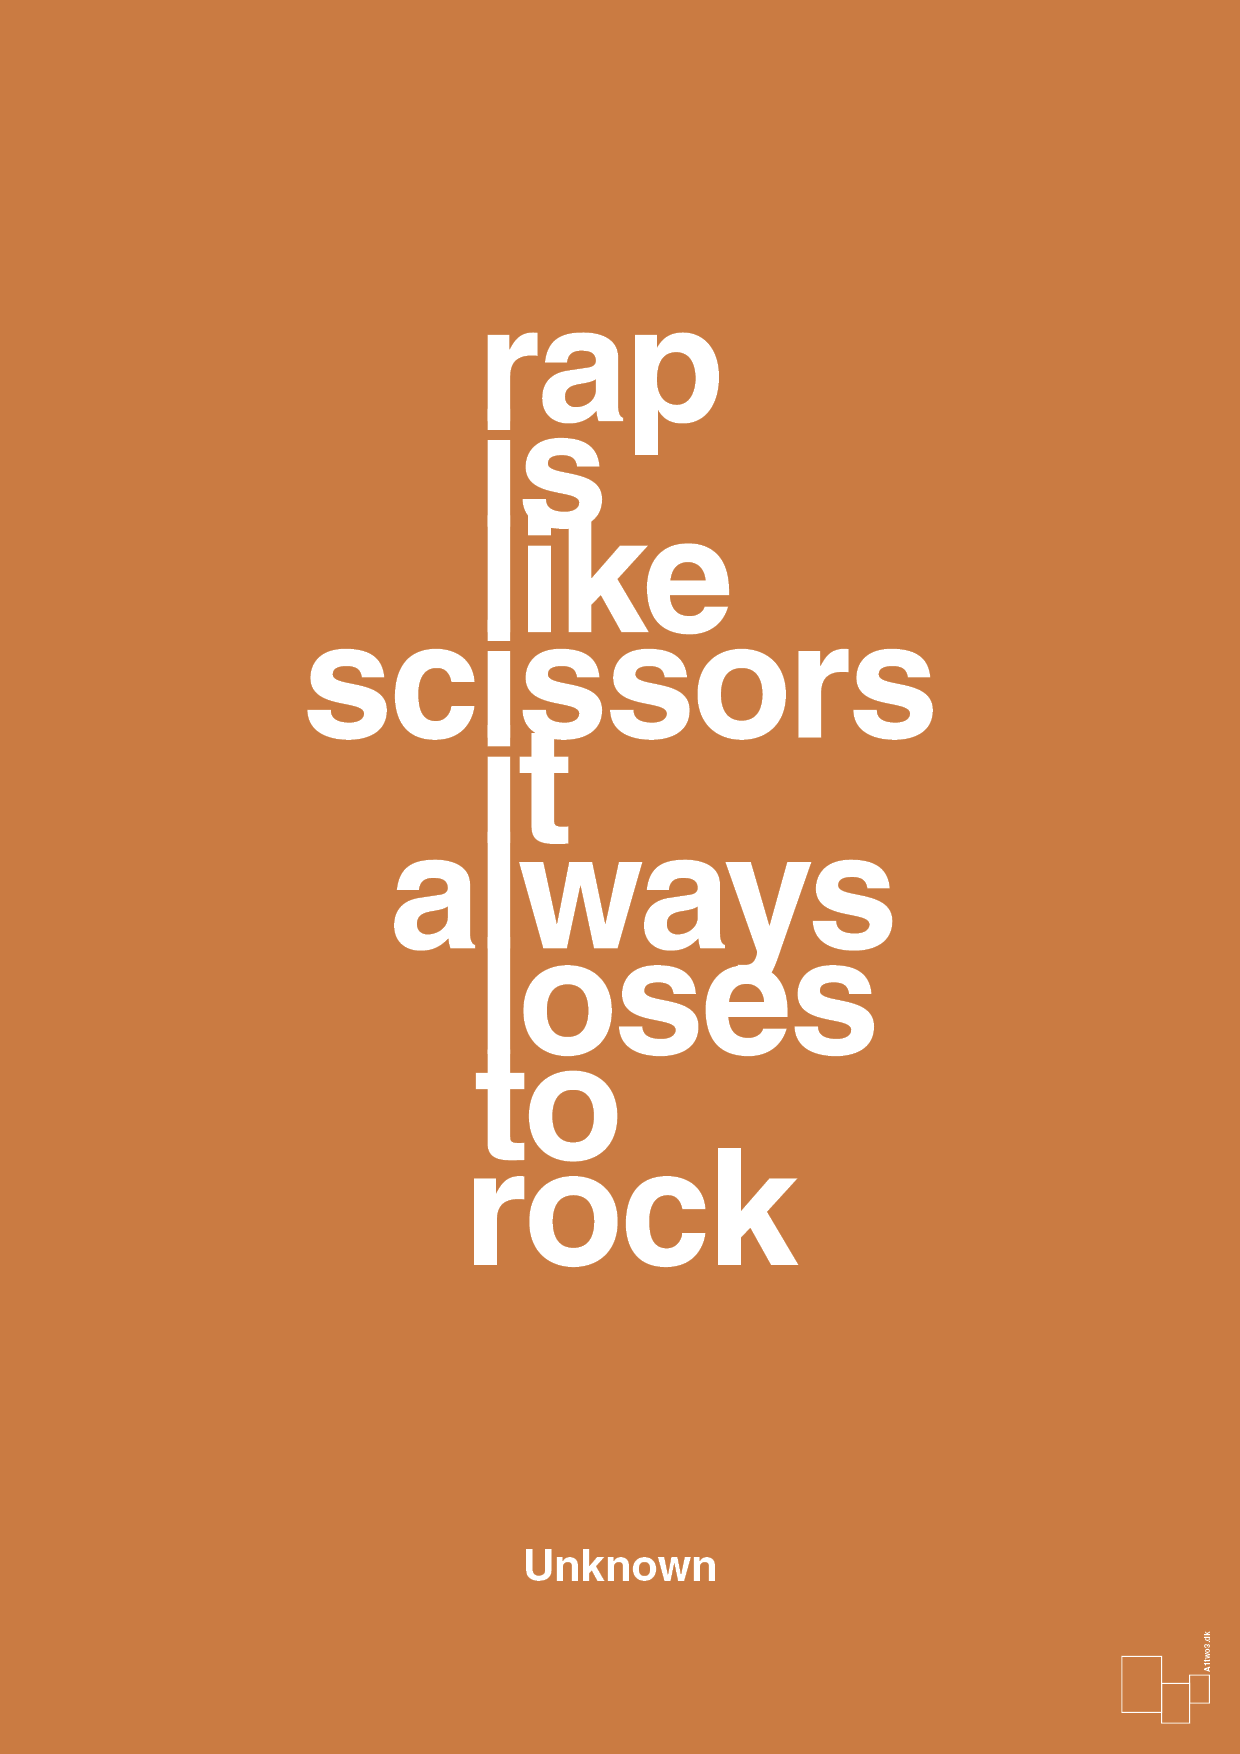 rap is like scissors it always loses to rock - Plakat med Citater i Rumba Orange